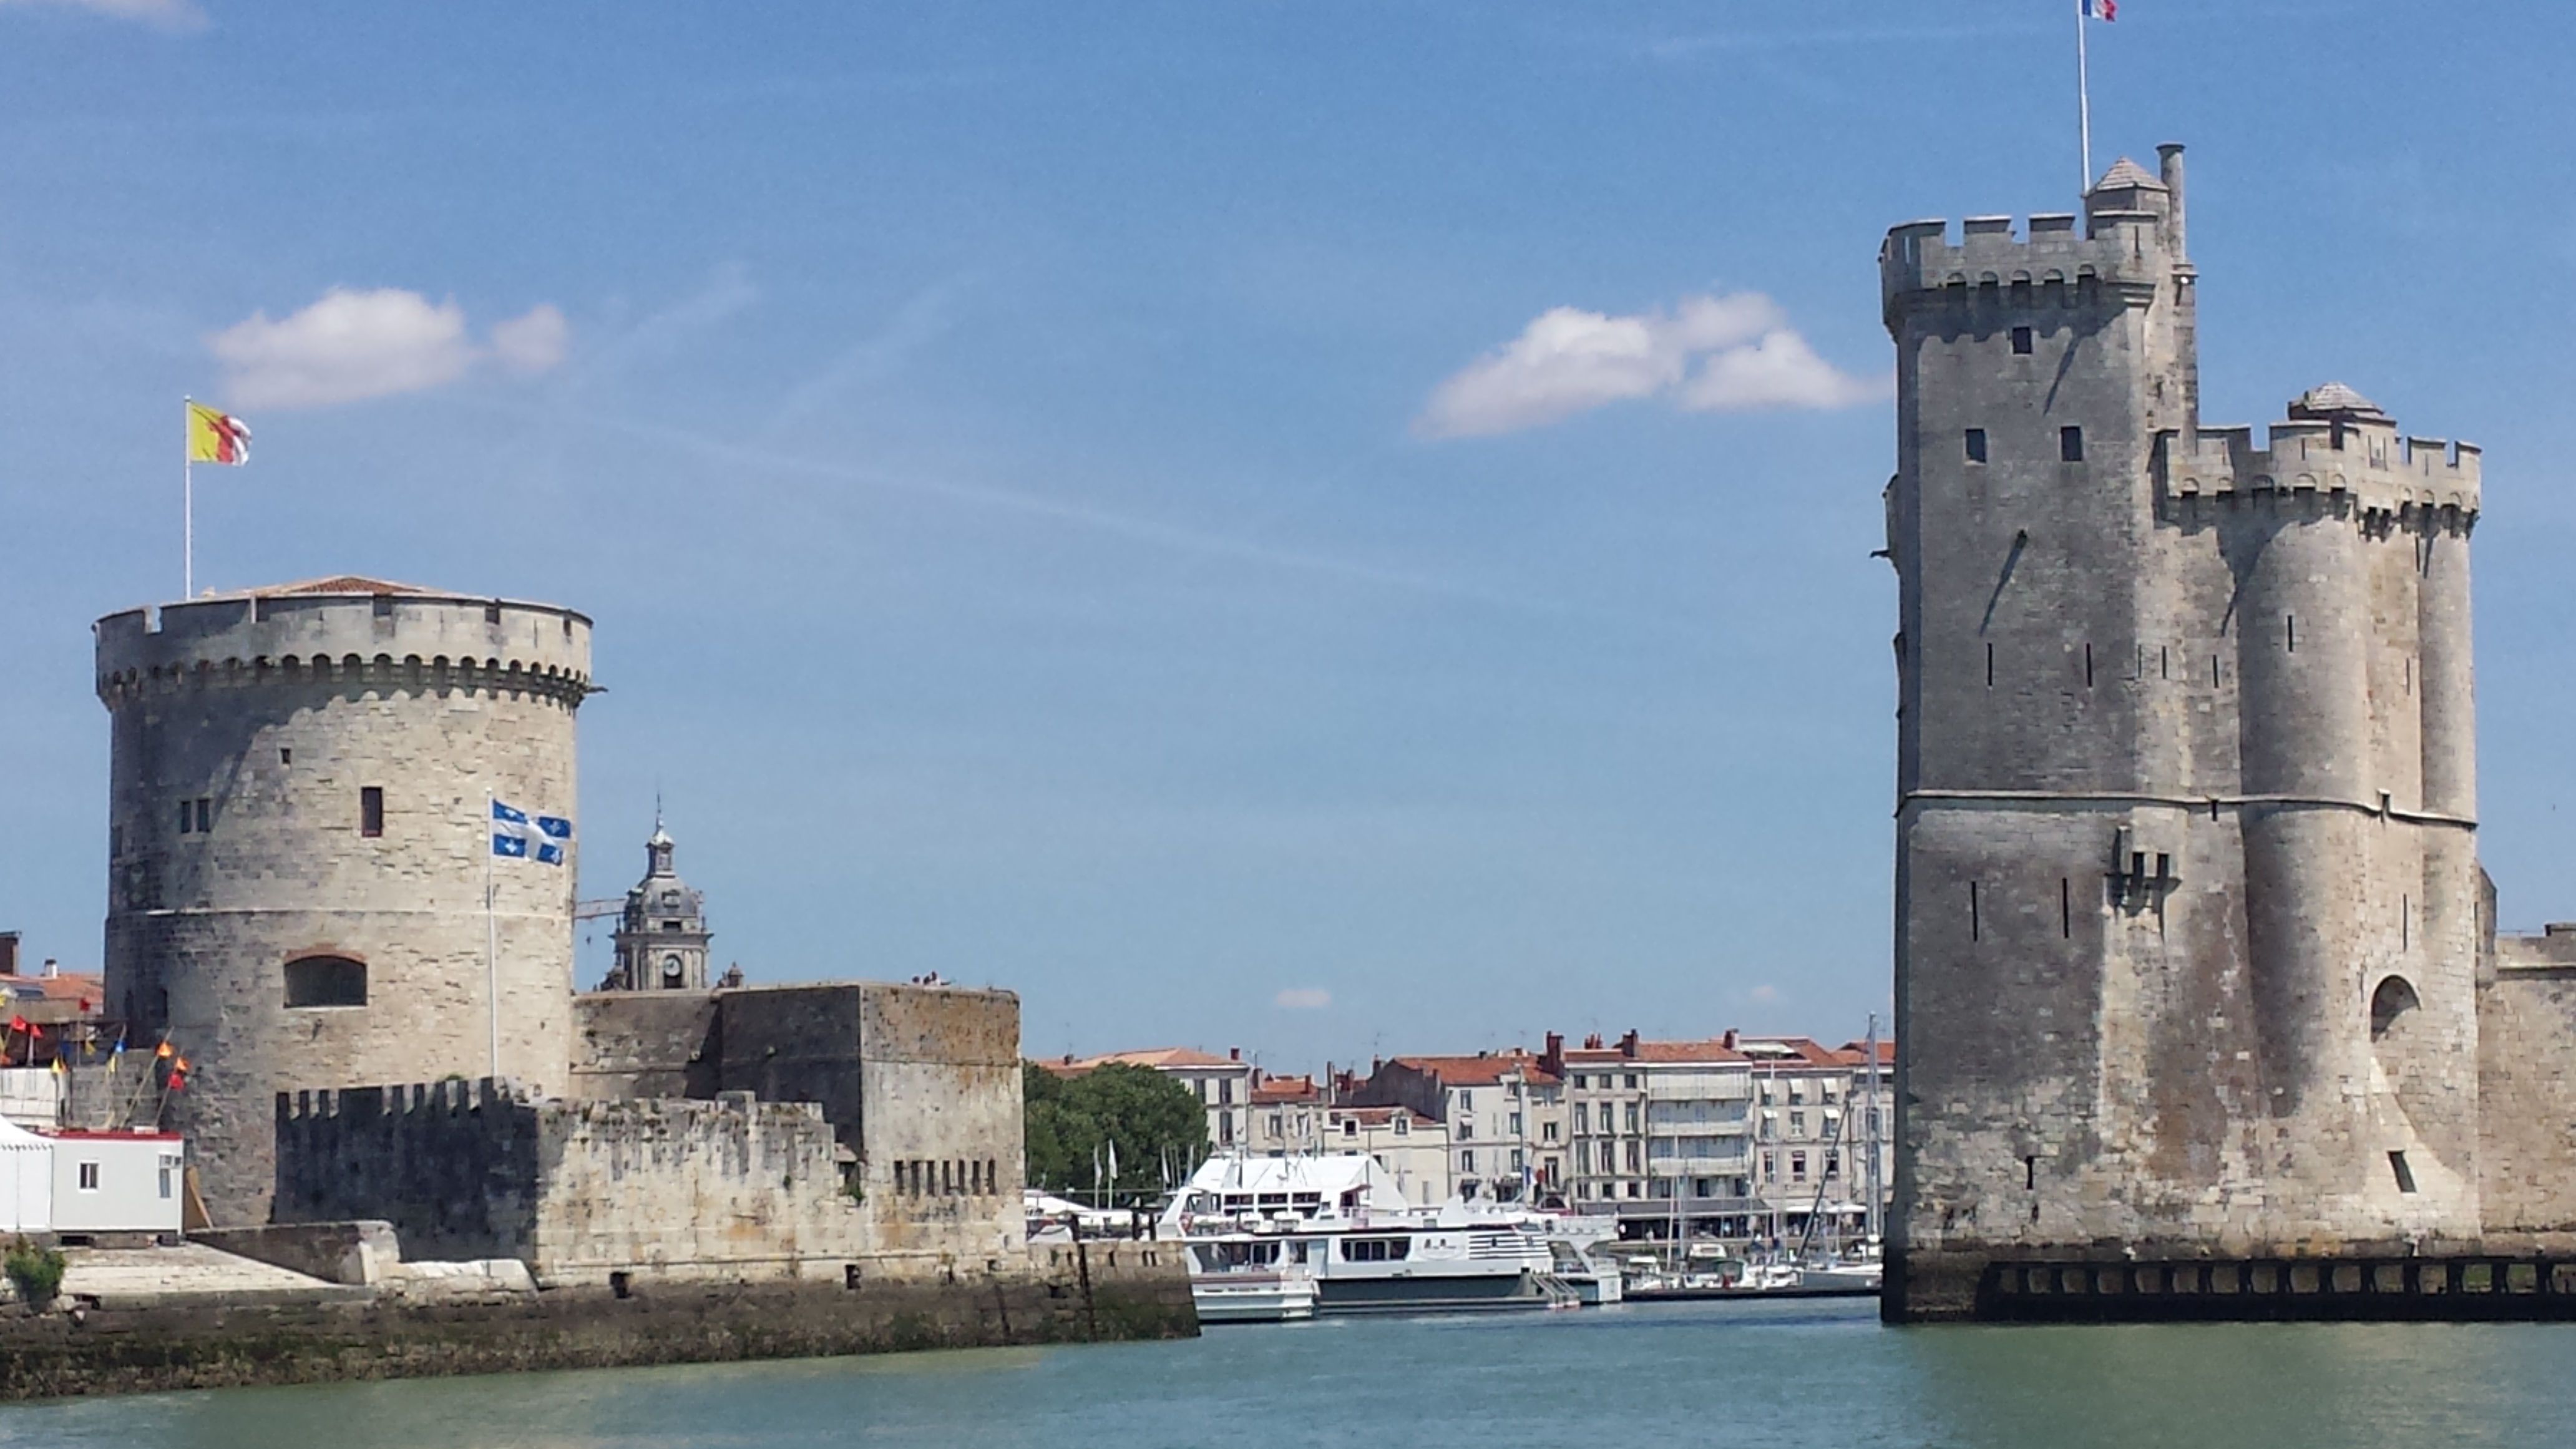 La Rochelle, beautiful and rebellious